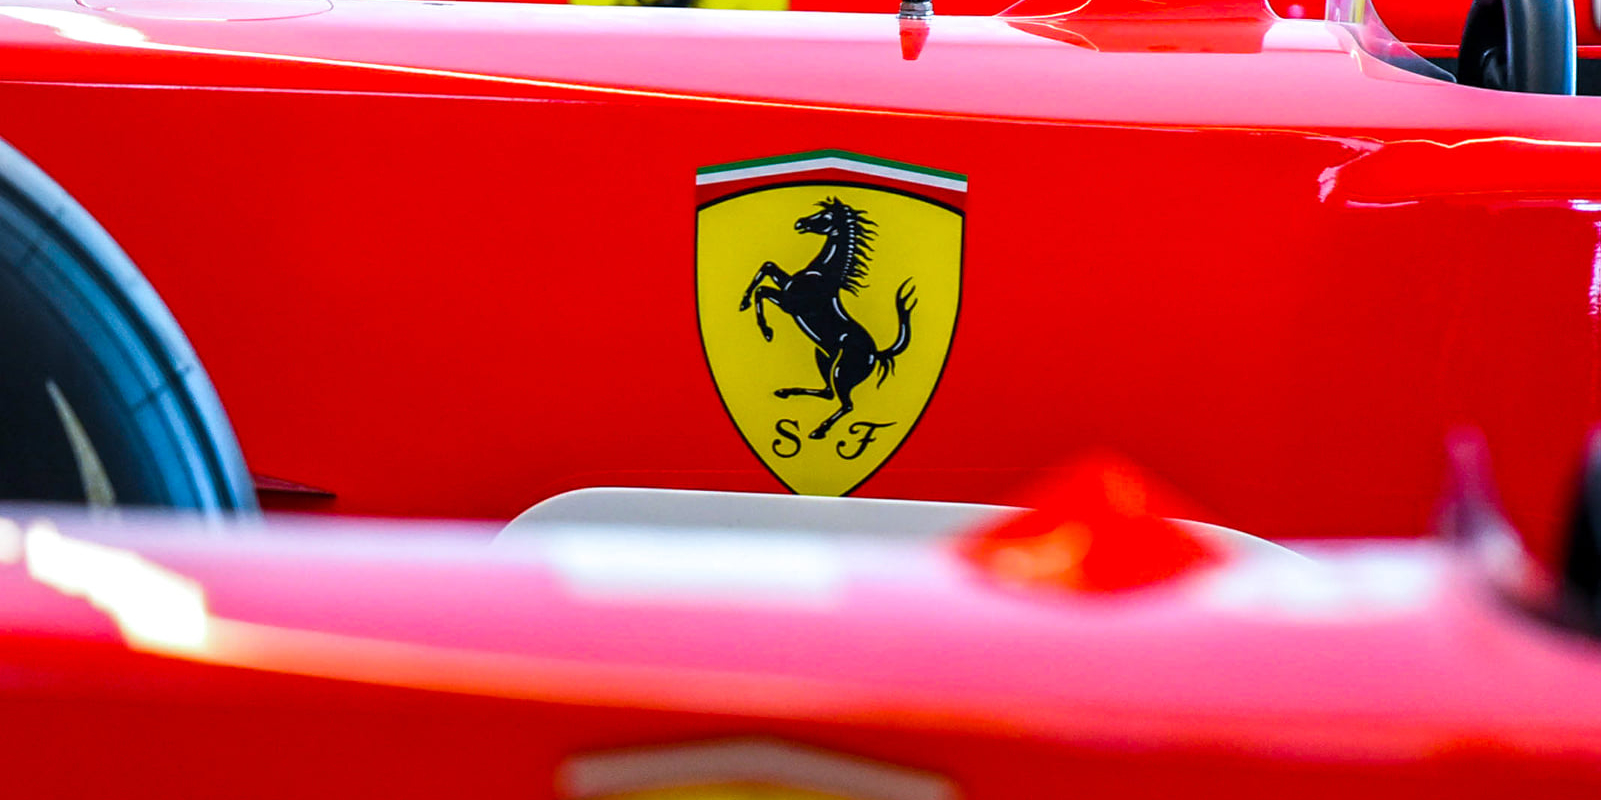 Ferrari odhalilo název vozu pro sezónu 2023